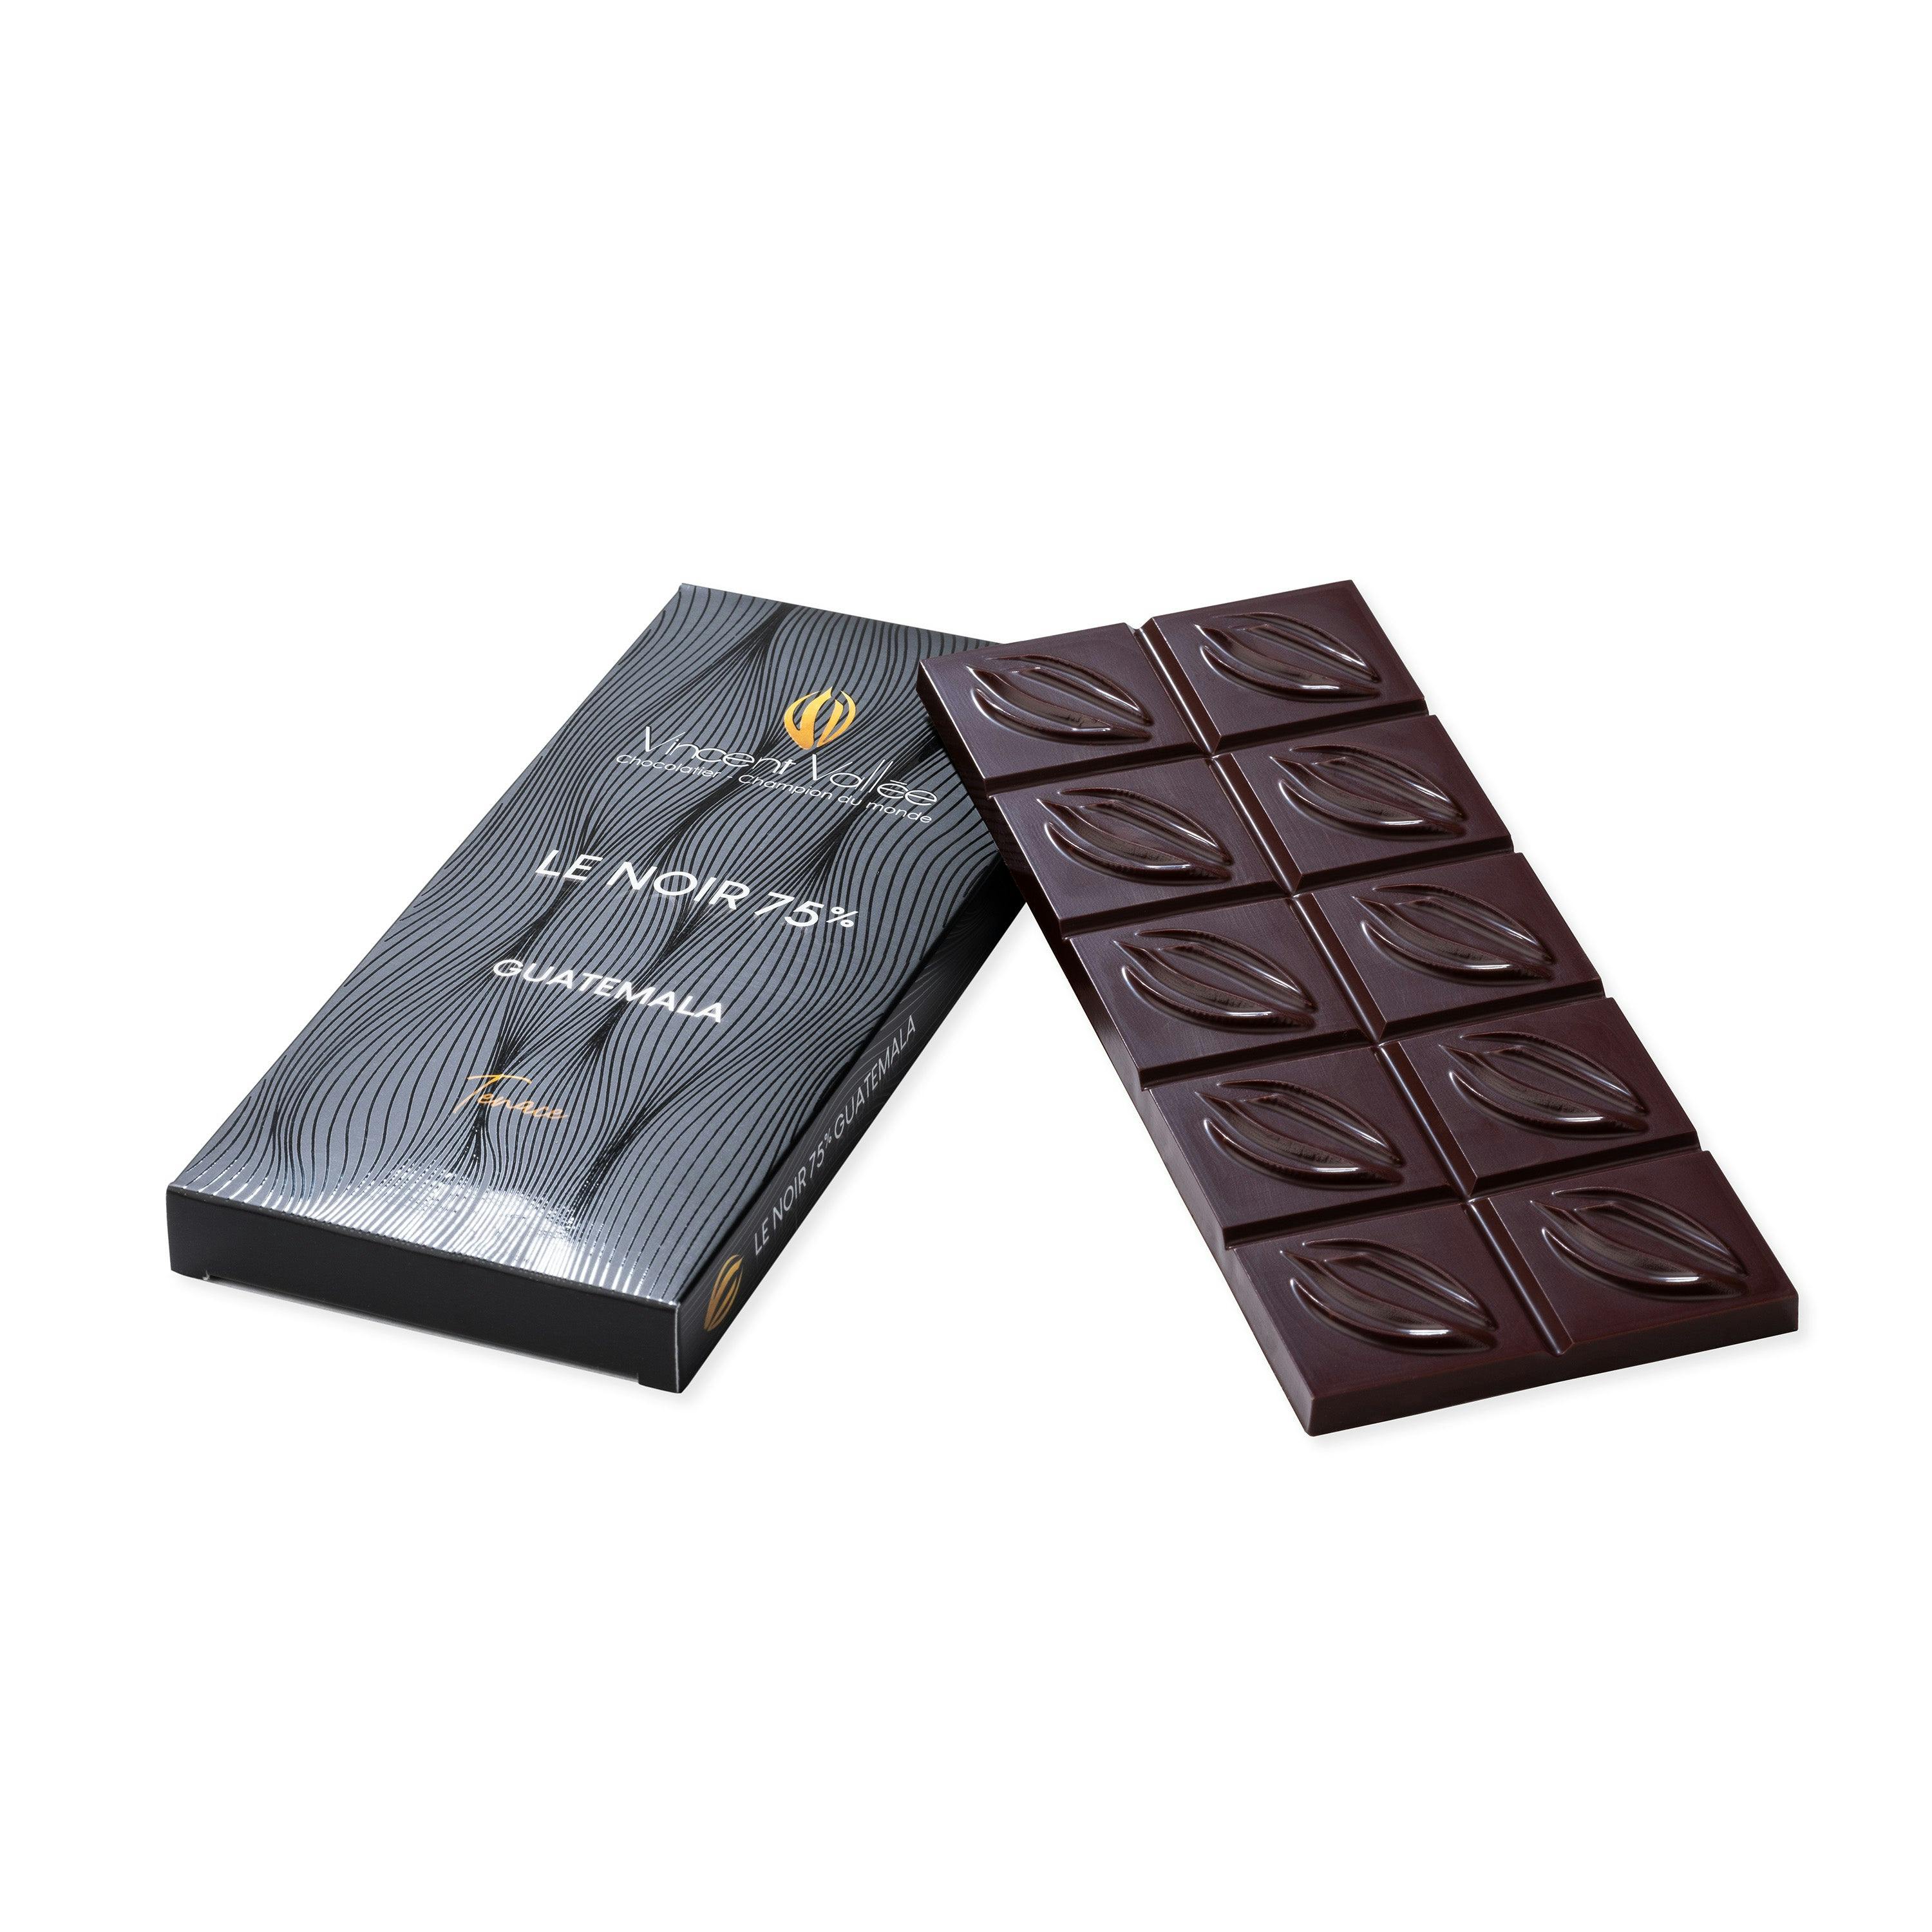 Guatemala 75% - Vincent Vallée world champion chocolatier